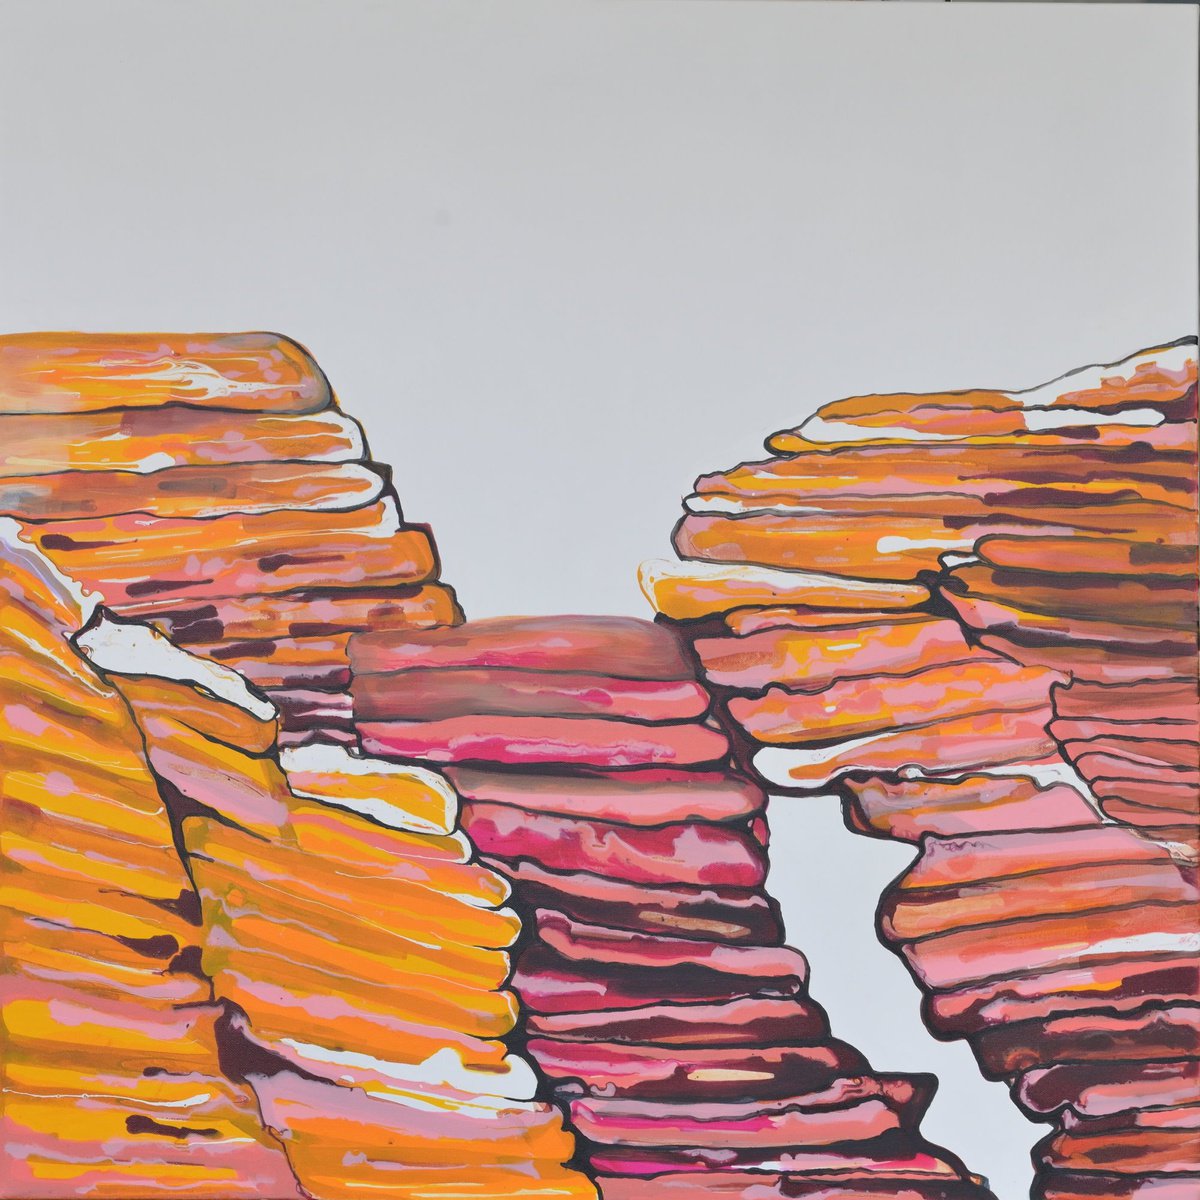 Nature Series - Pancake Rocks by Sung Lee